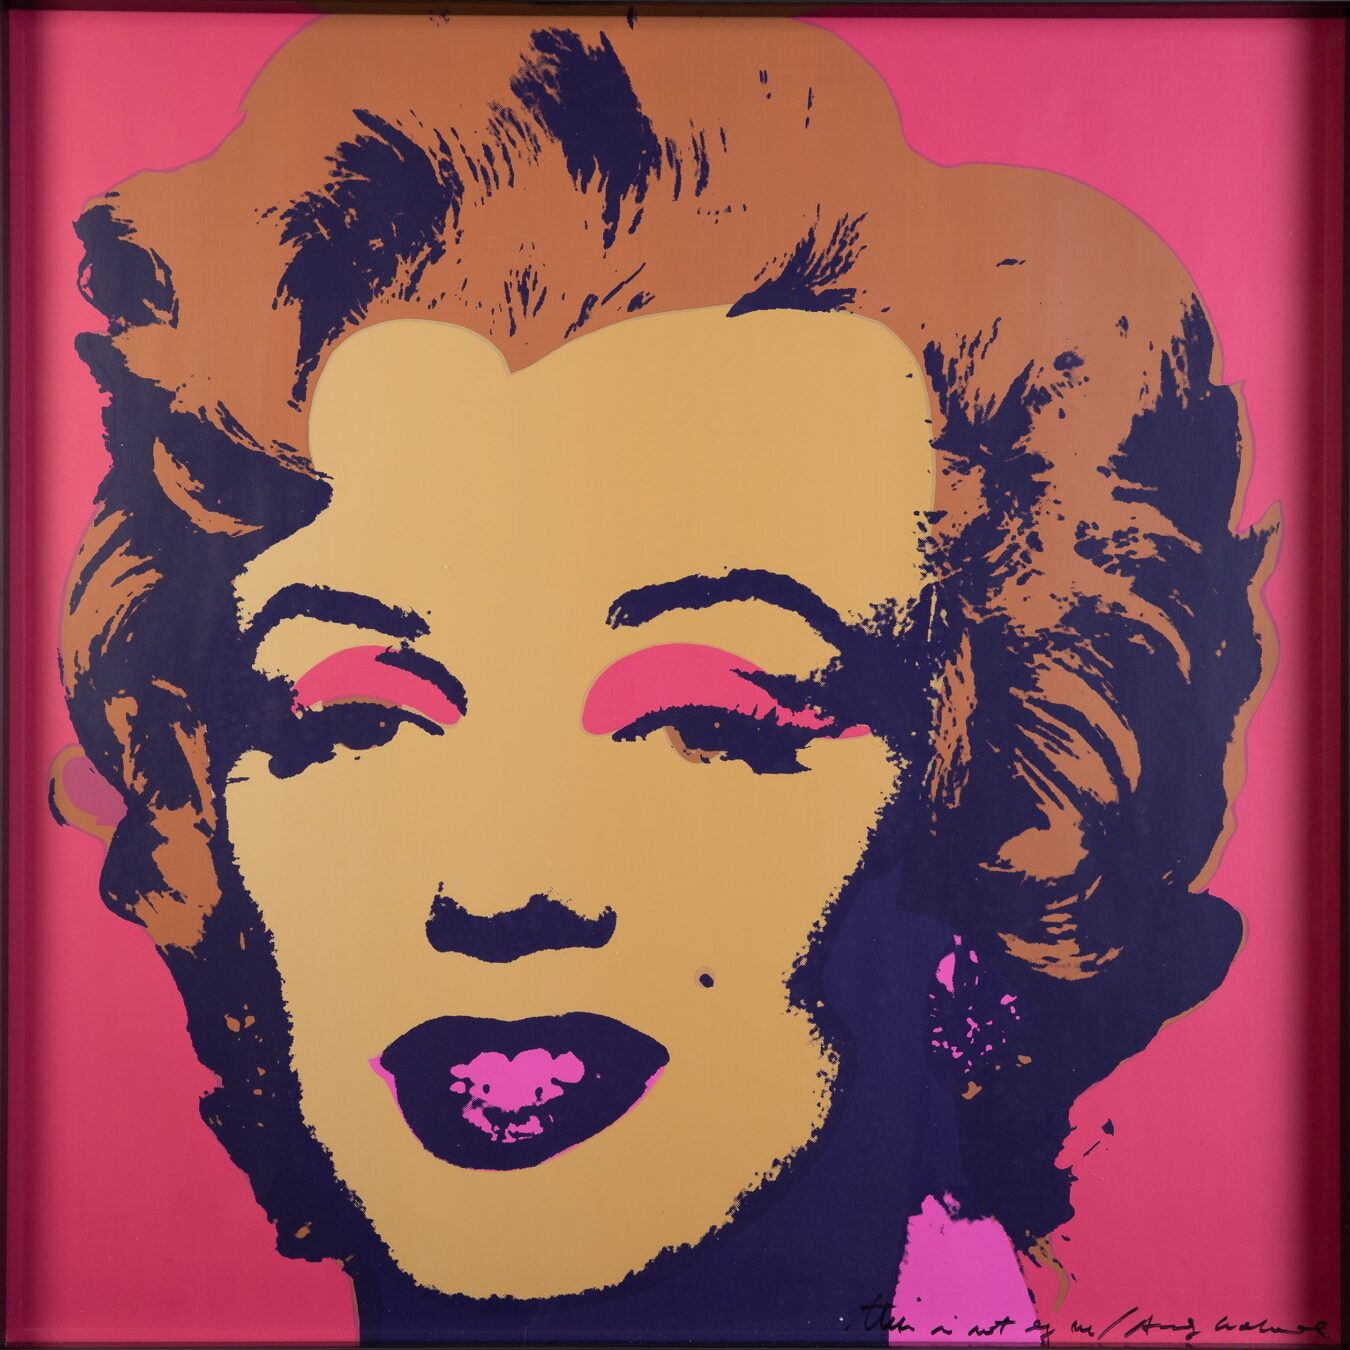 Andy Warhol… The iconic pop art genius